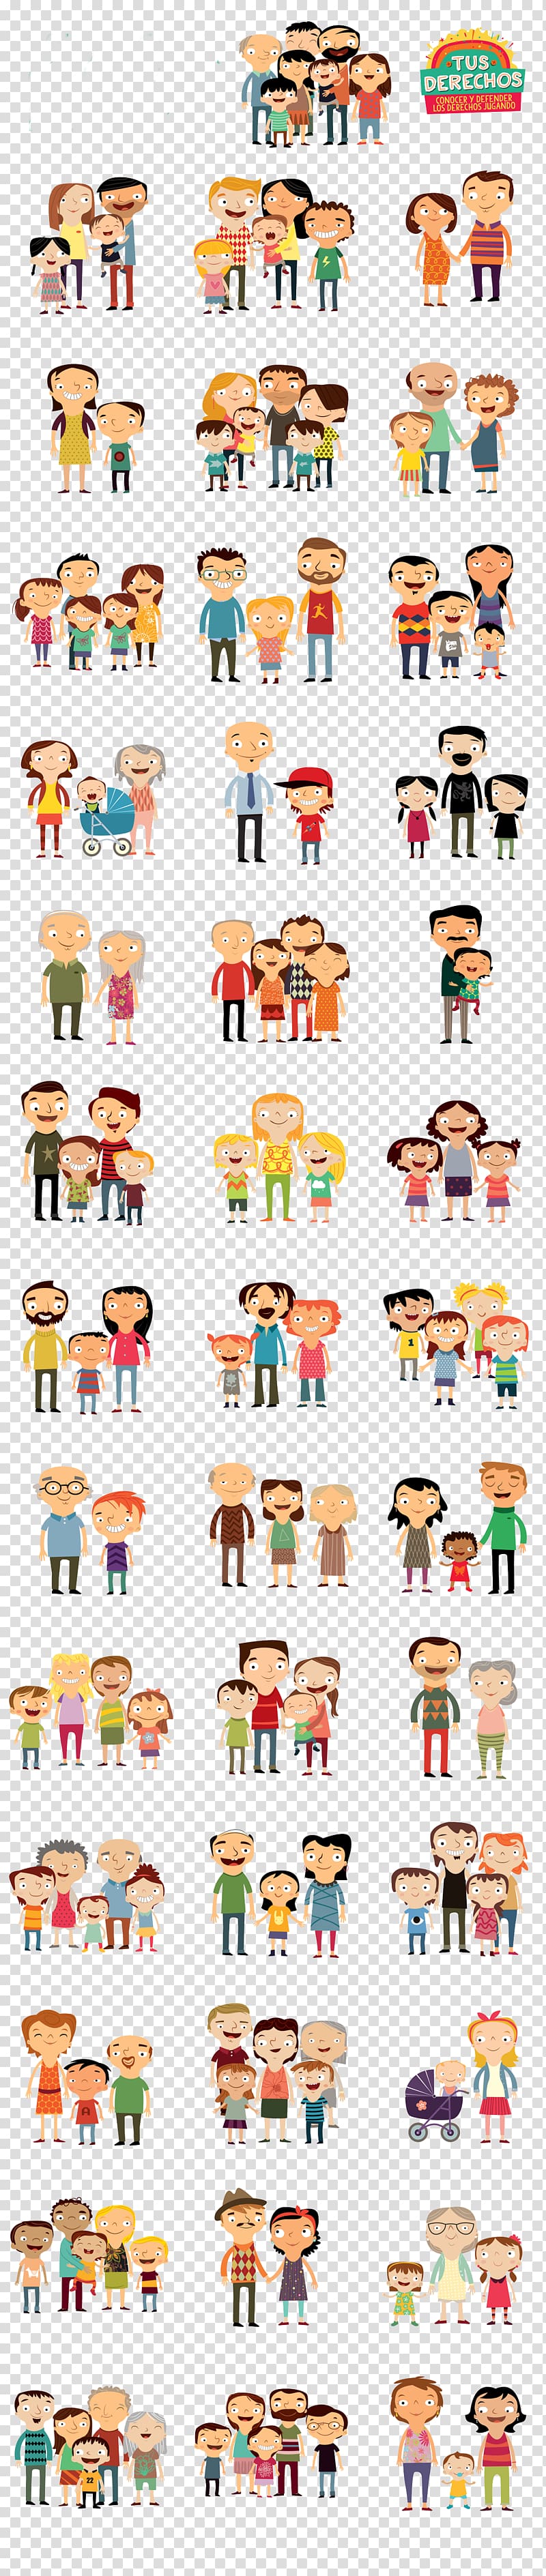 creative cartoon family portrait transparent background PNG clipart